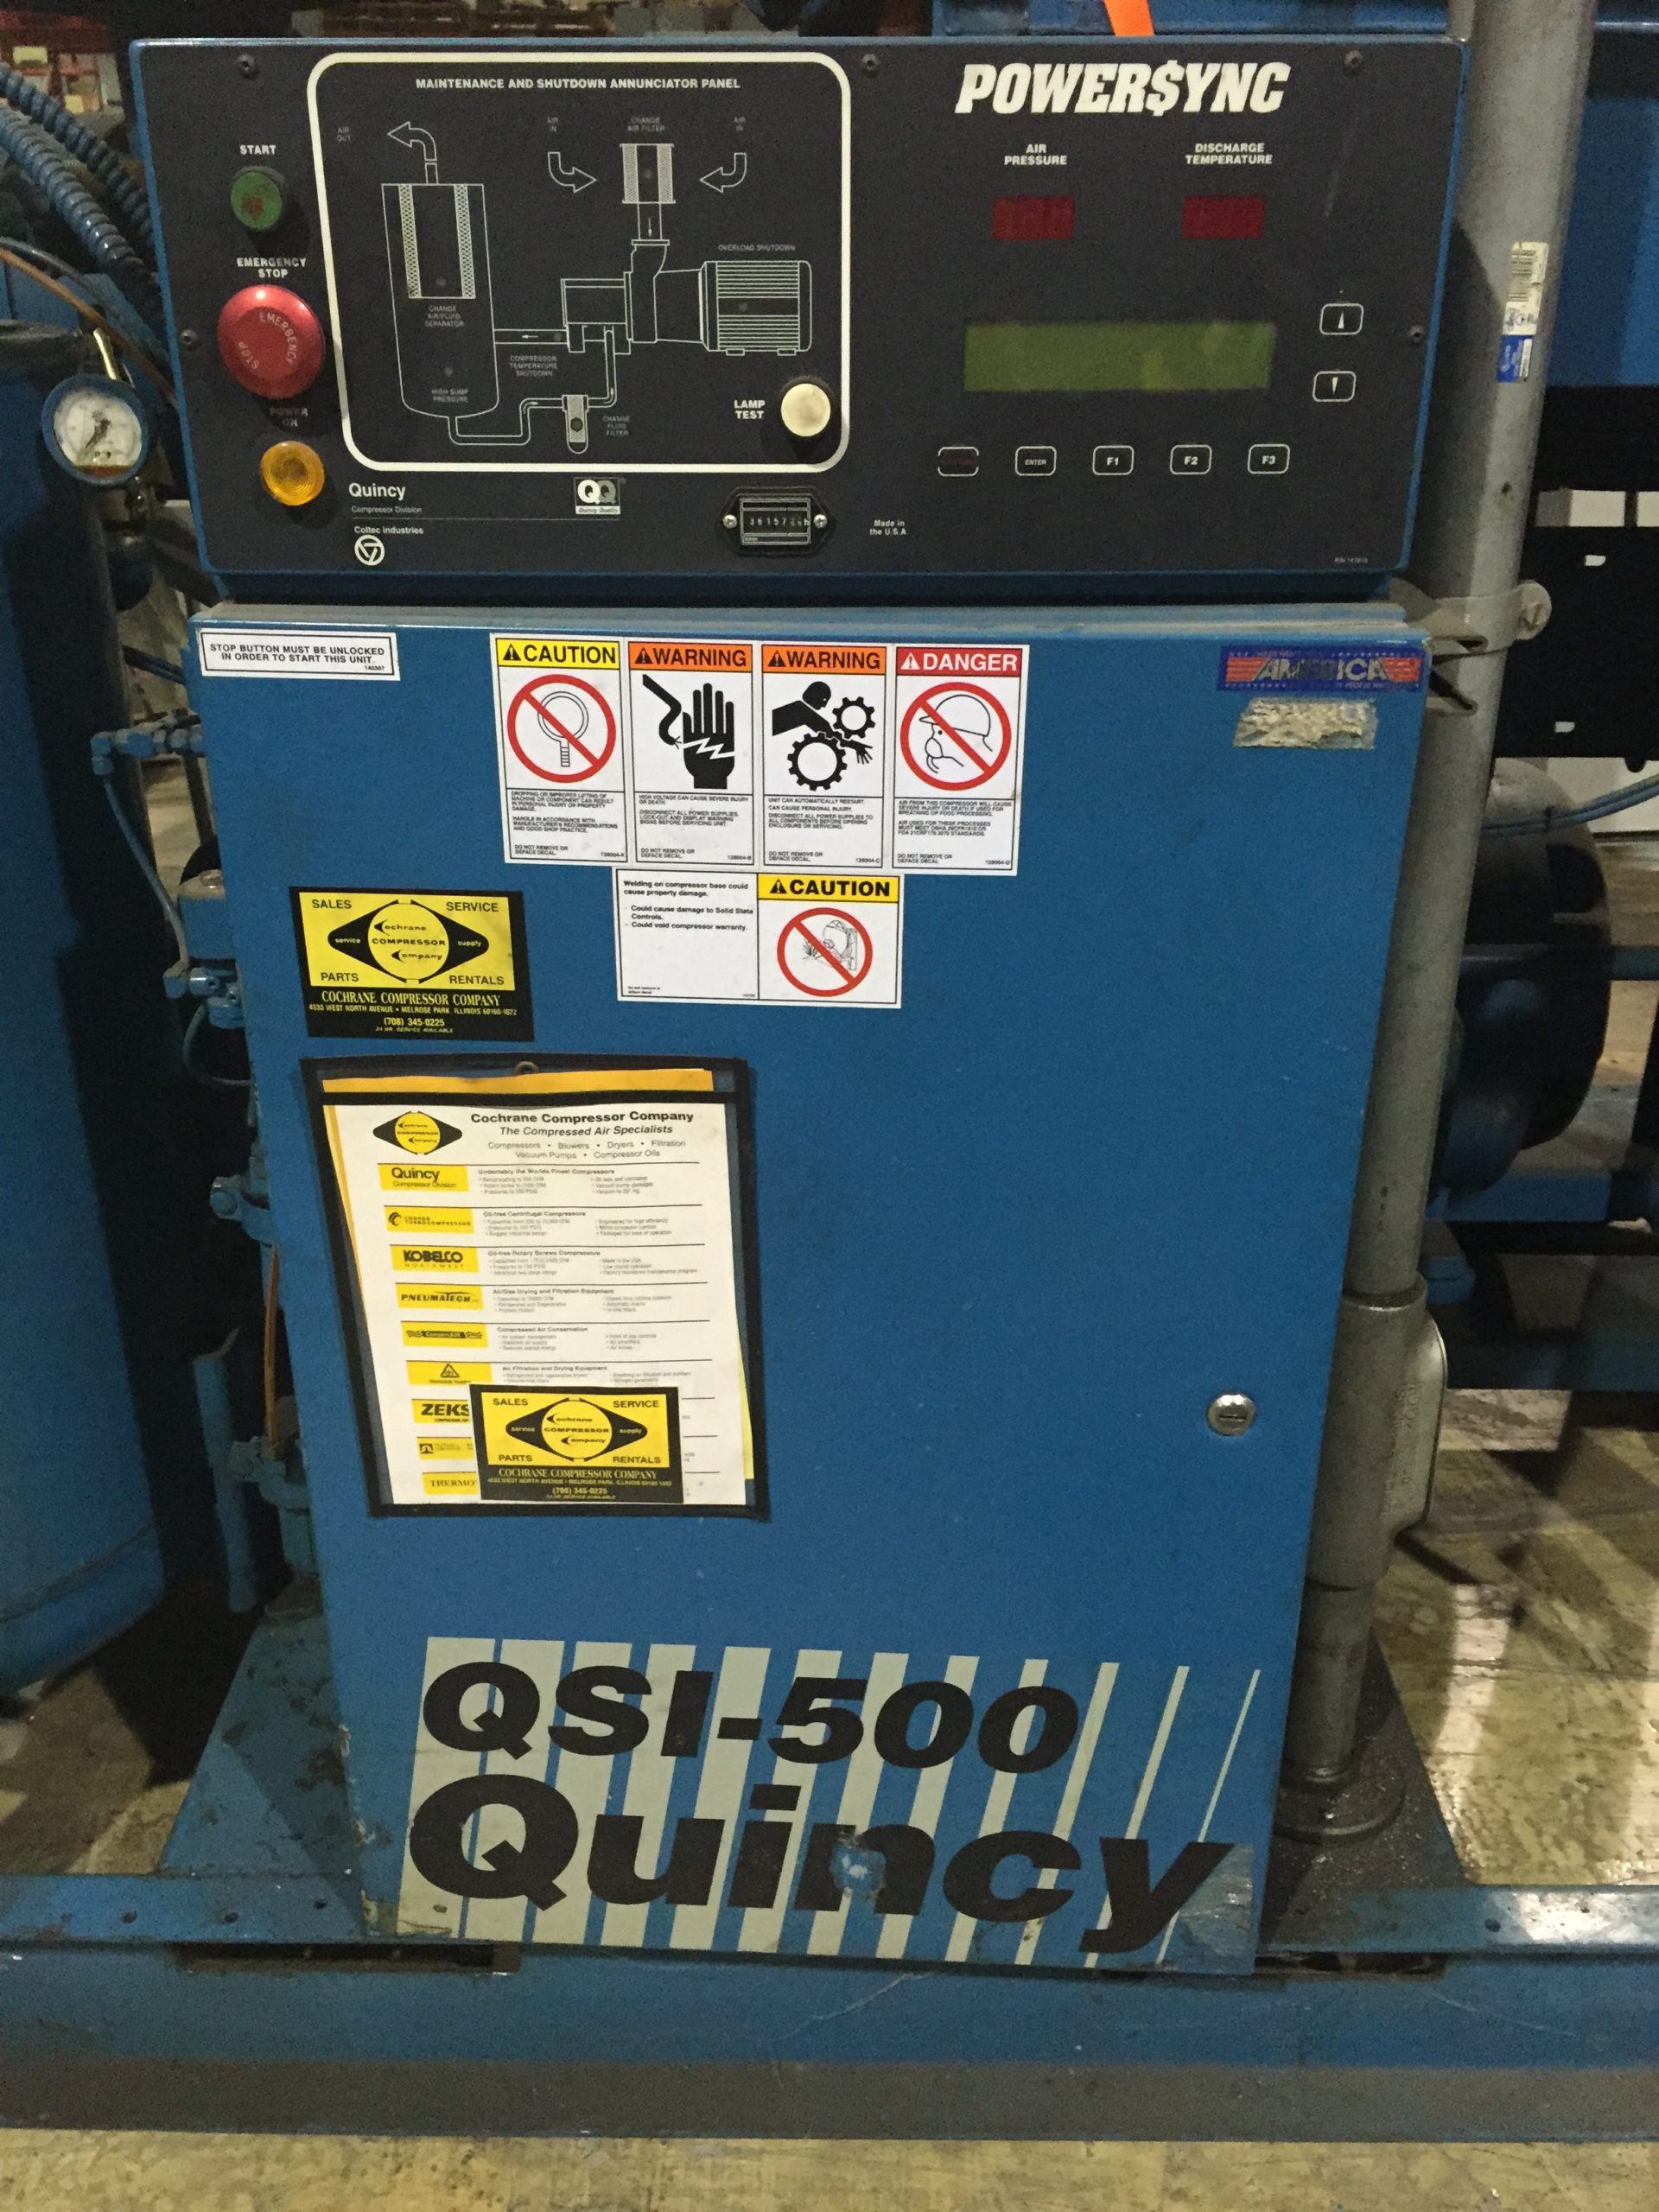 Details about   Quincy Air Compressor Push Button Siemens Start Button for QSI-500 